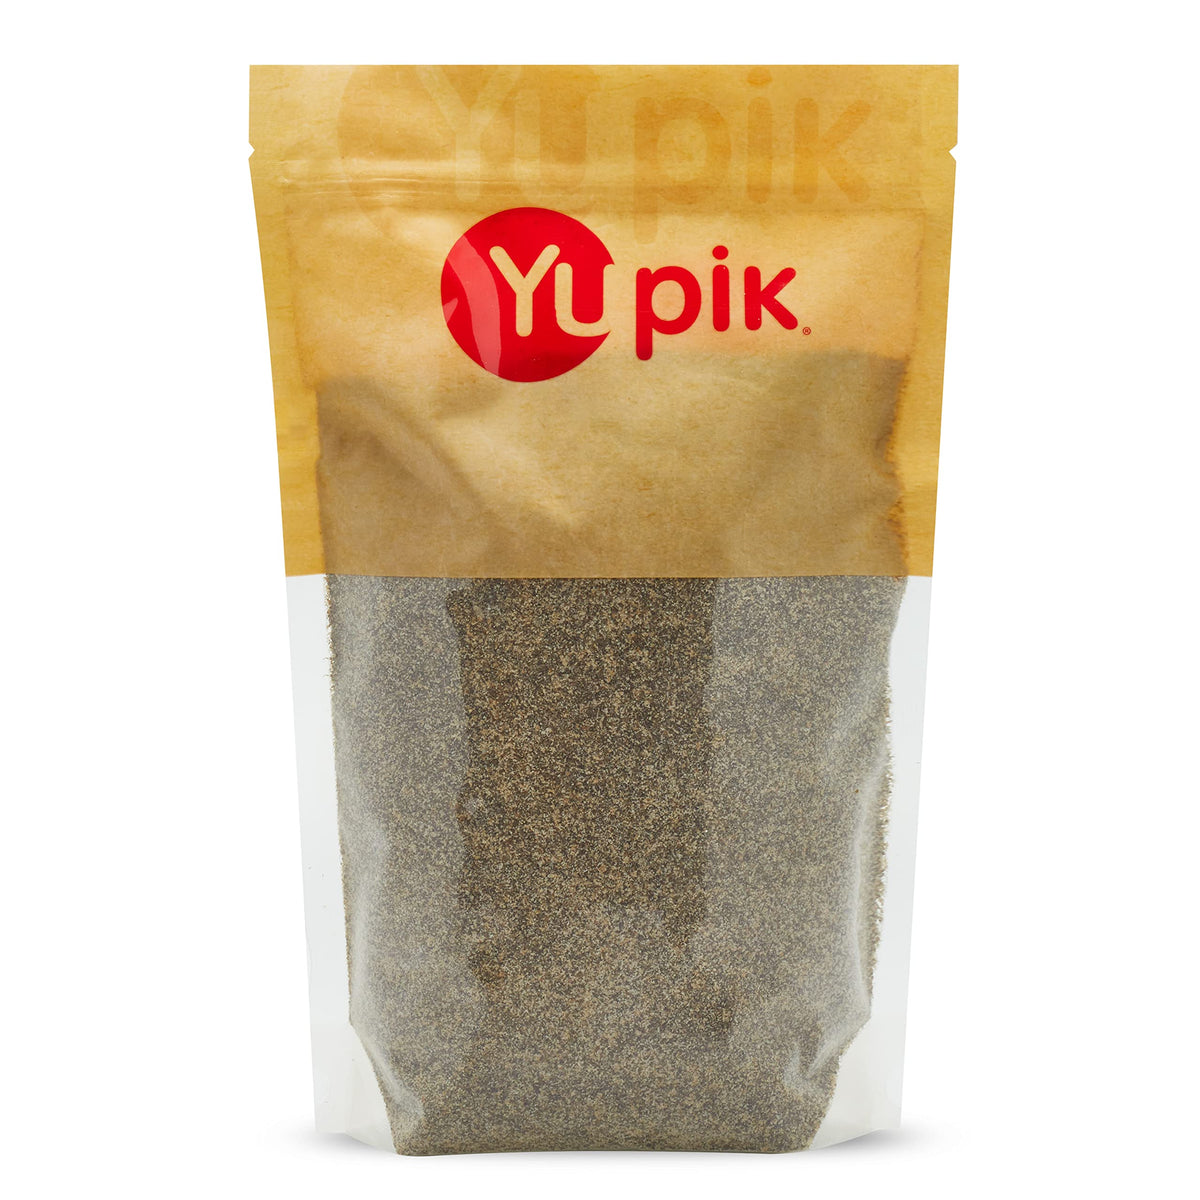 Yupik Chia Seeds Powder, 1Kg